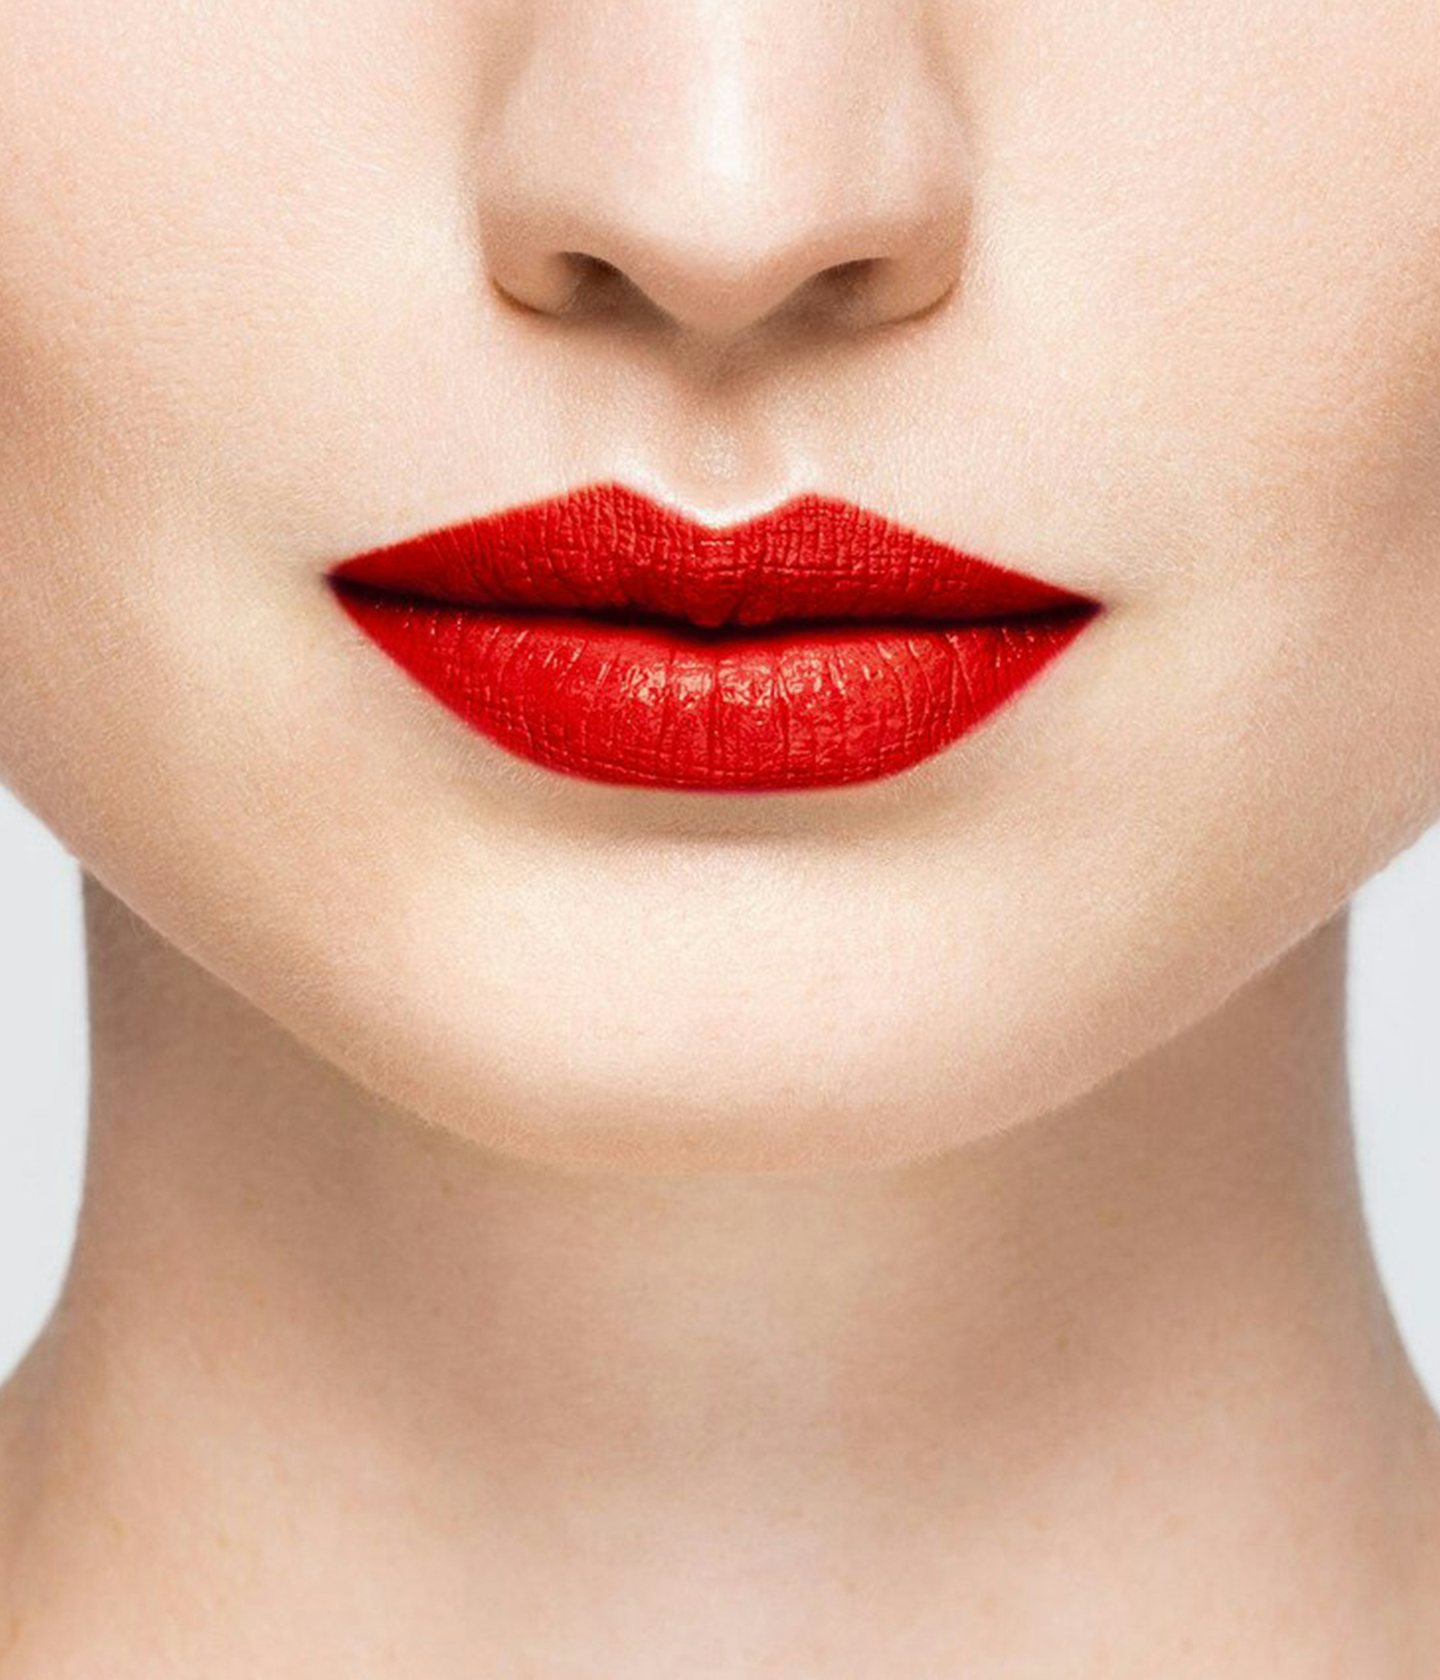 La bouche rouge Le Doré lipstick shade on the lips of a fair skin model